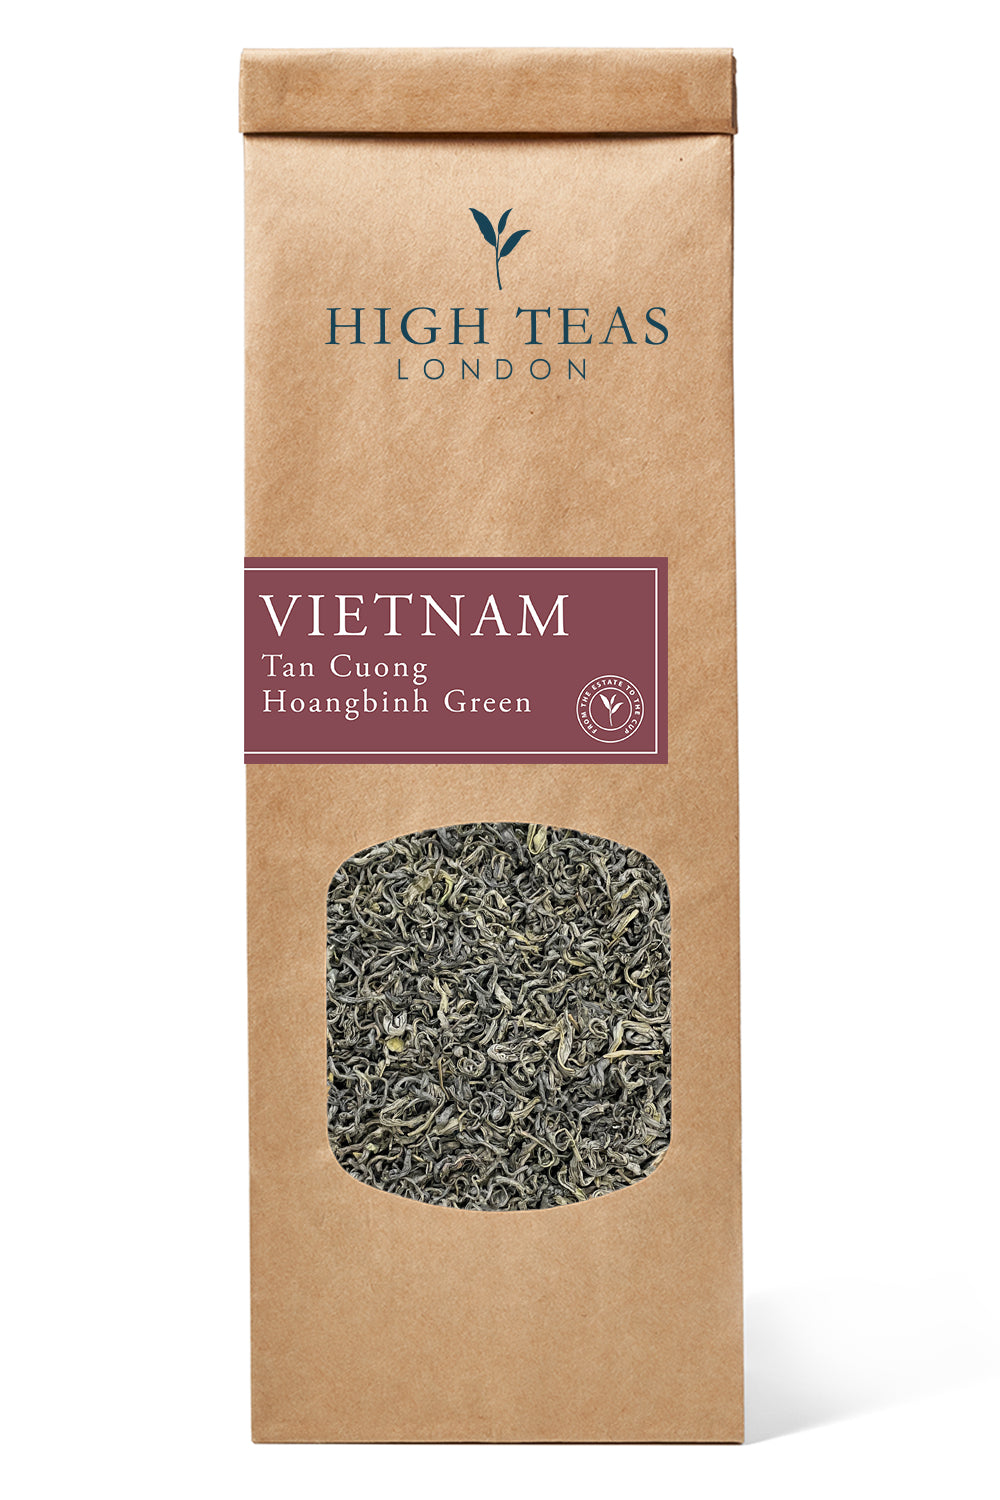 Vietnam - Tan Cuong Hoangbinh Green Tea-50 grams-Loose Leaf Tea-High Teas